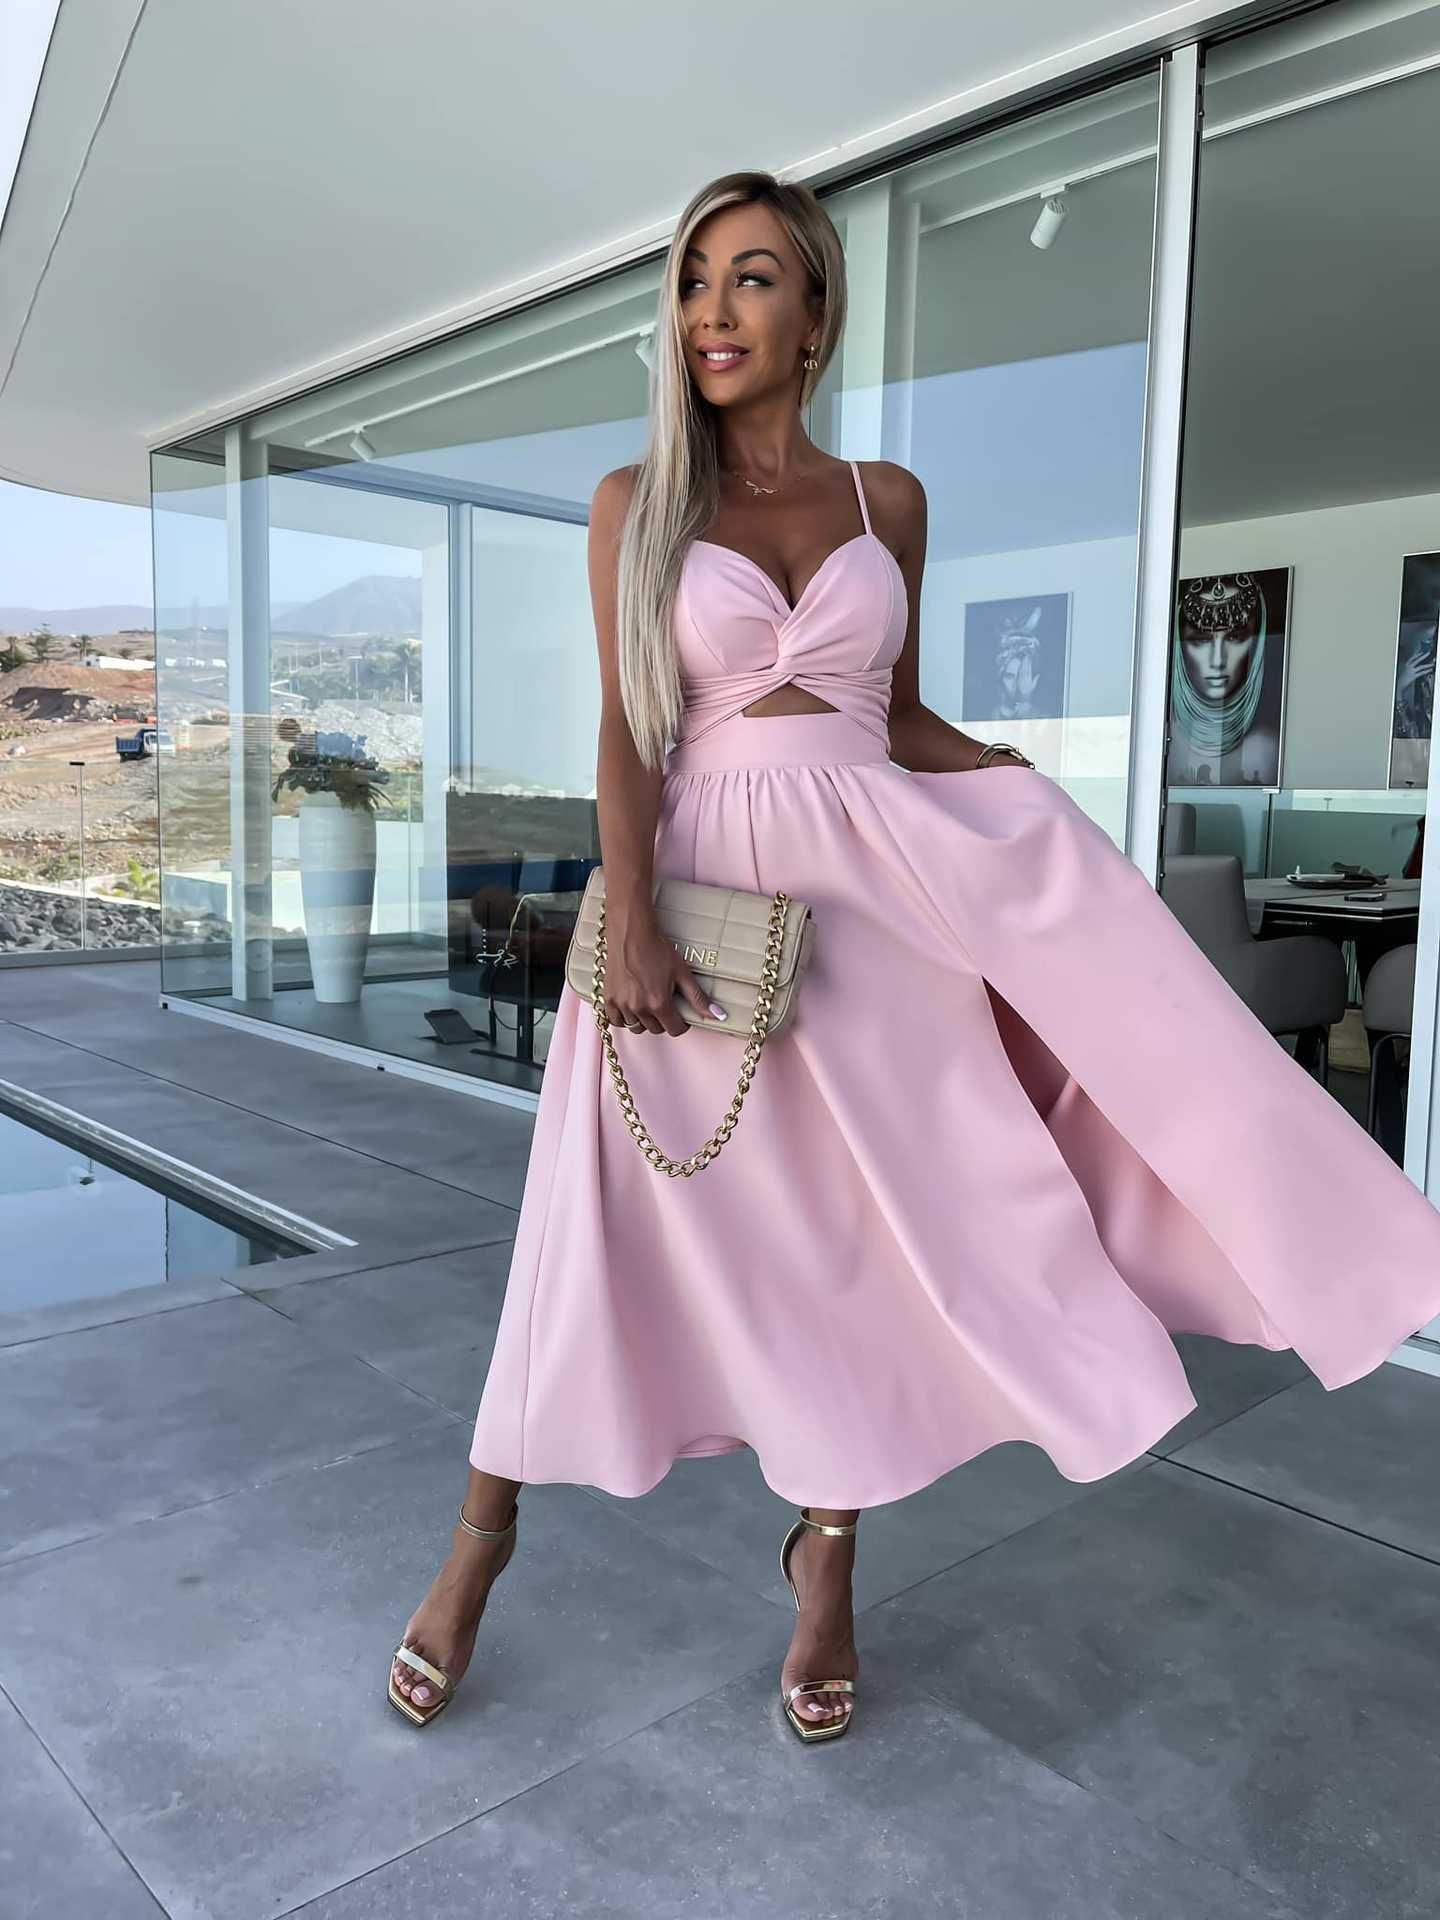 Elegant Midriff Baring Summer Dresses-Dresses-Pink-S-Free Shipping Leatheretro